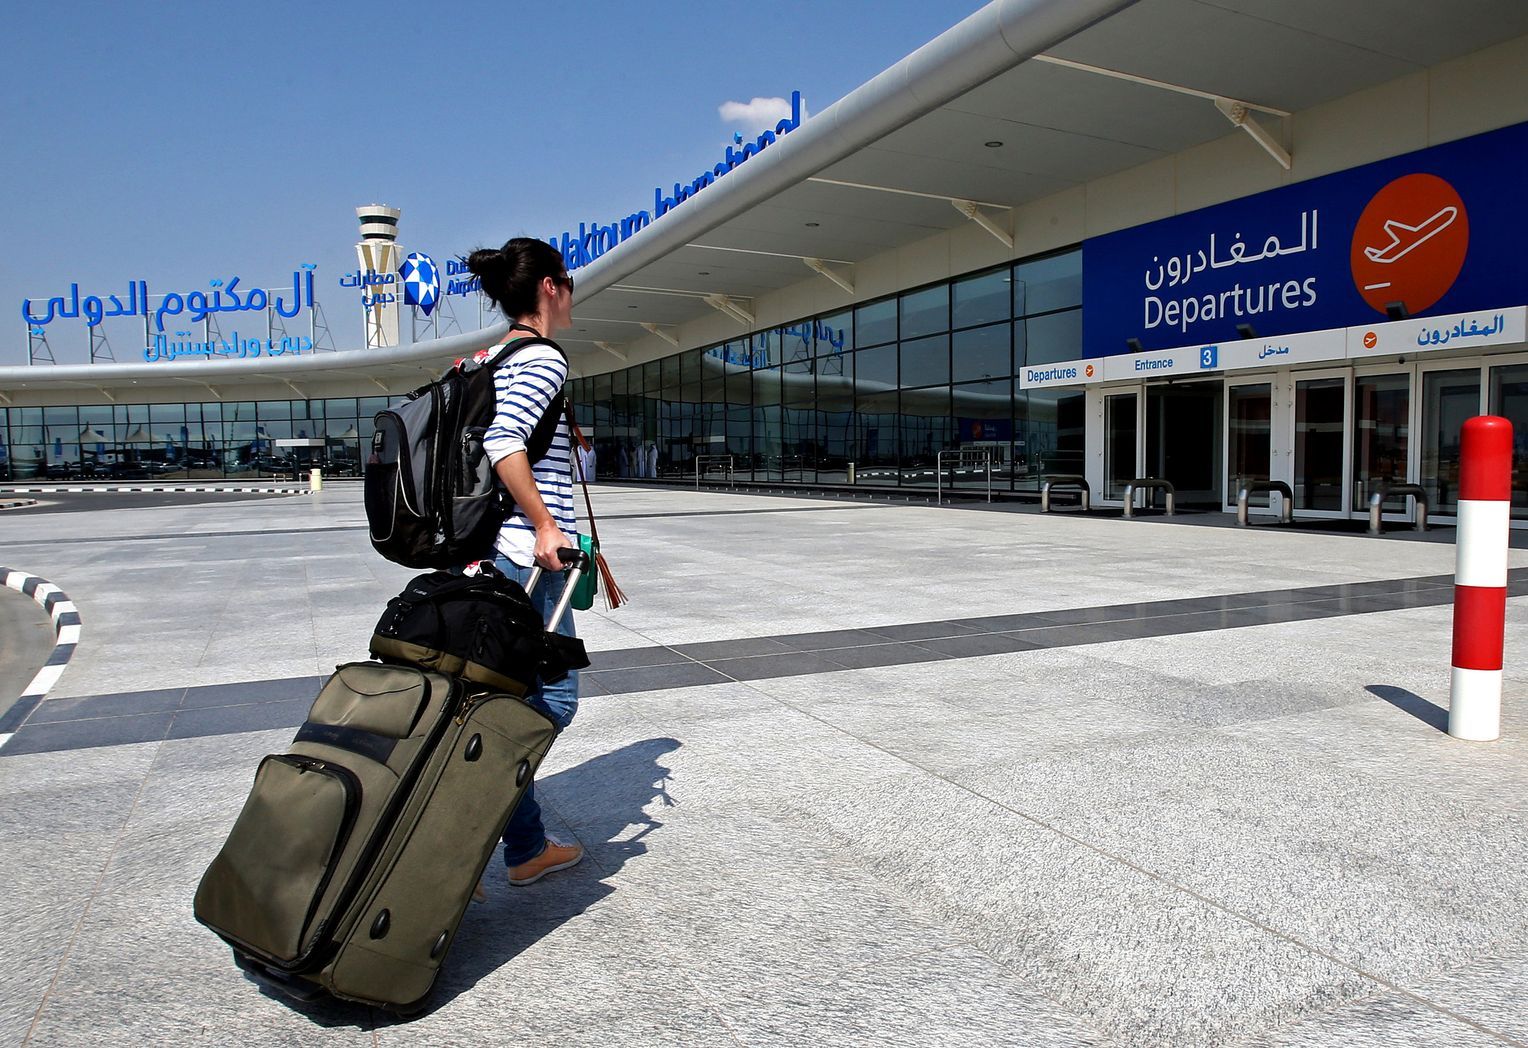 He arrived at the airport. Аэропорт arrive. Arrivals в аэропорту. Аэропорт Дубай с чемоданом. Турист с чемоданом.